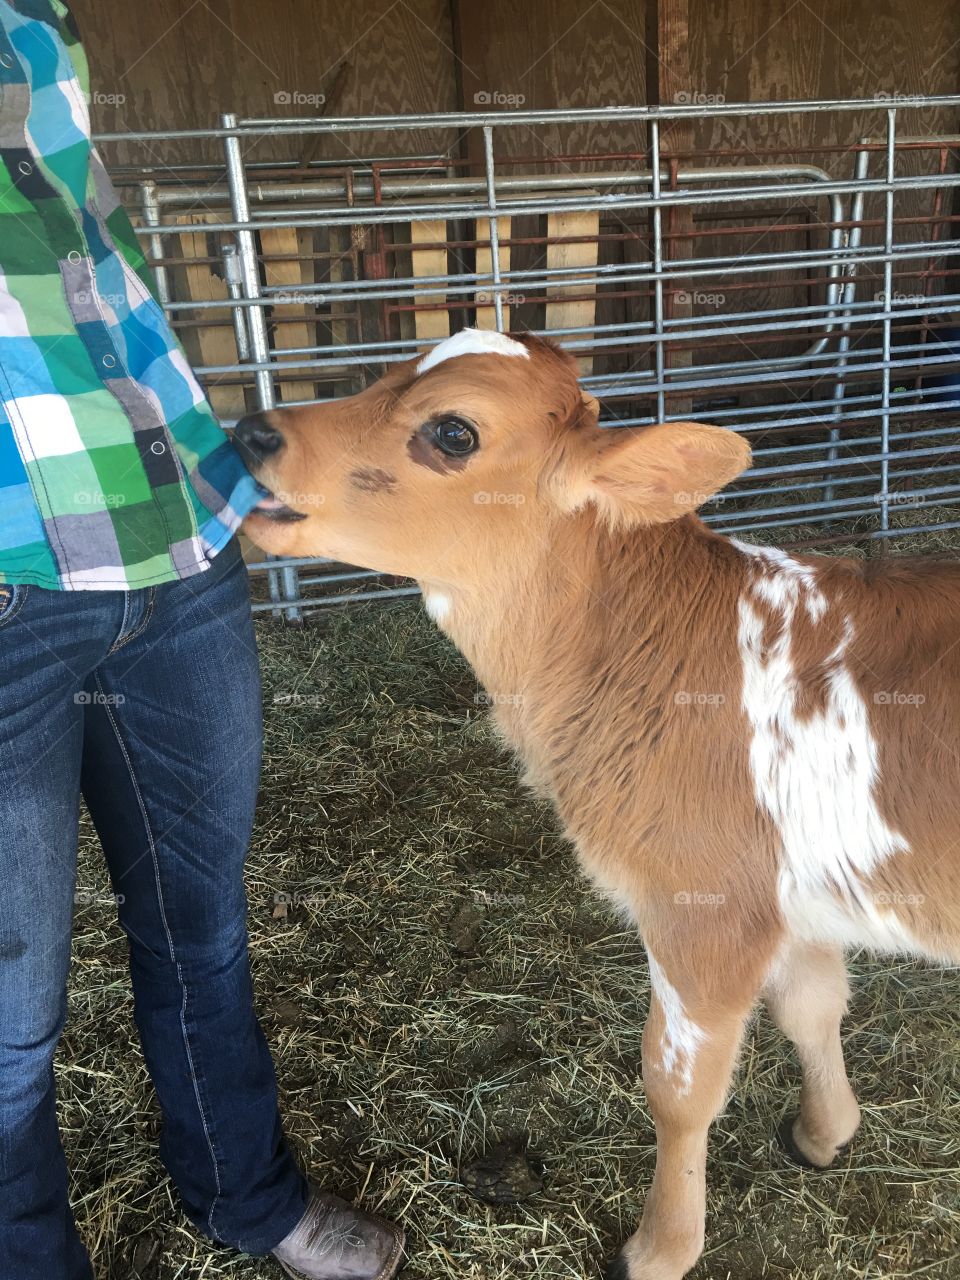 Baby calf cow eating shirt 